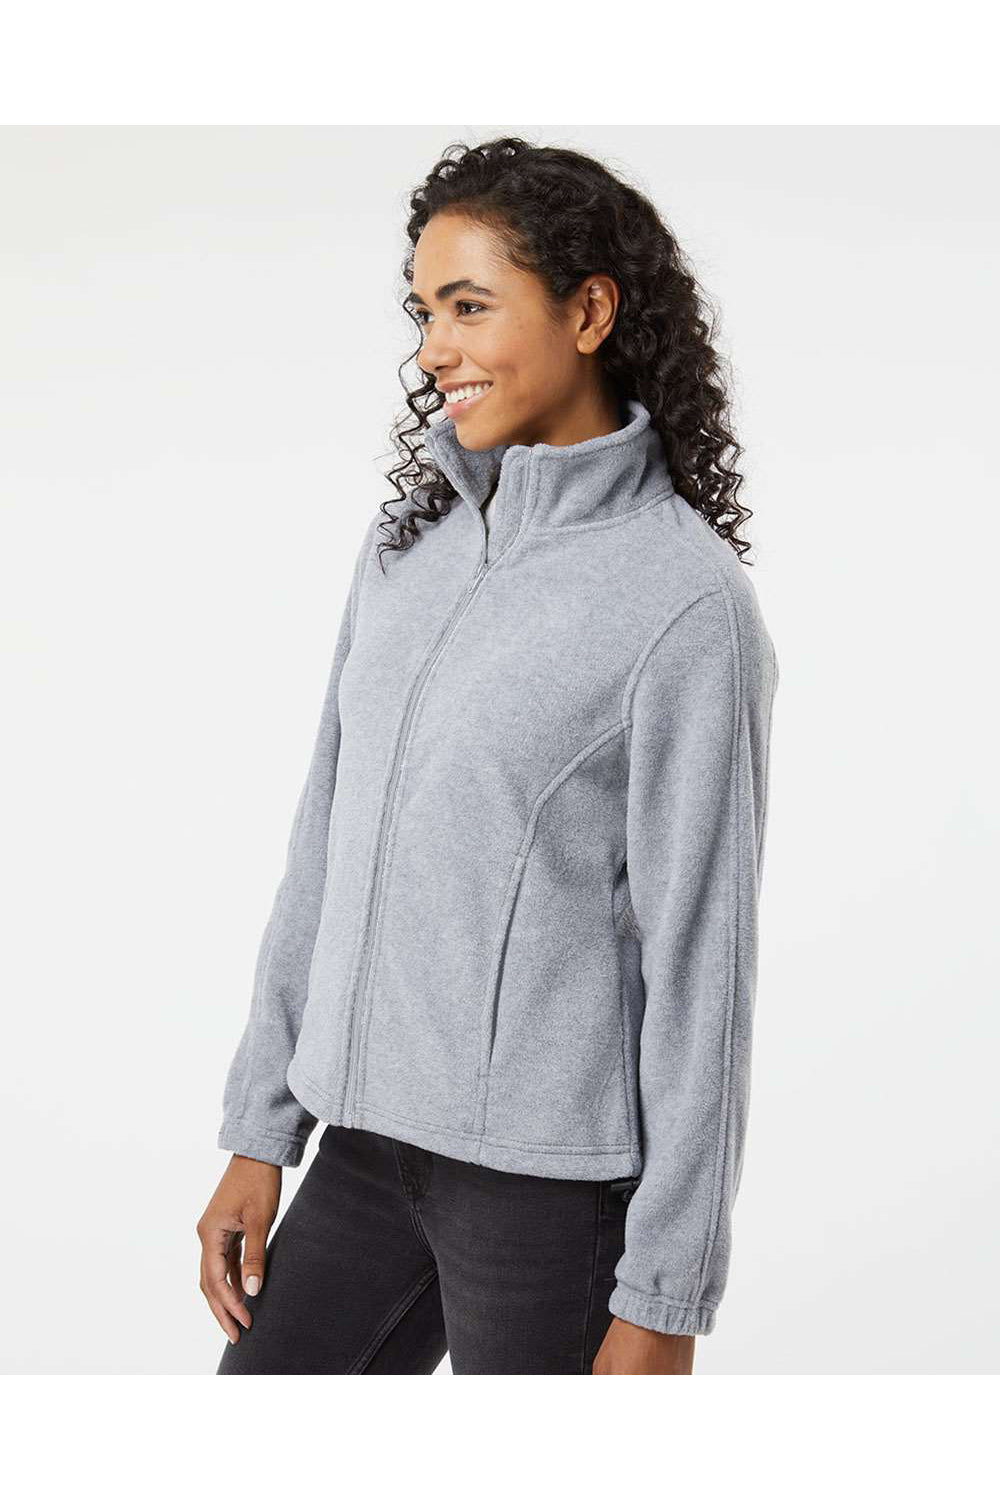 Burnside 5062 Womens Polar Fleece Full Zip Sweatshirt Heather Grey Model Side